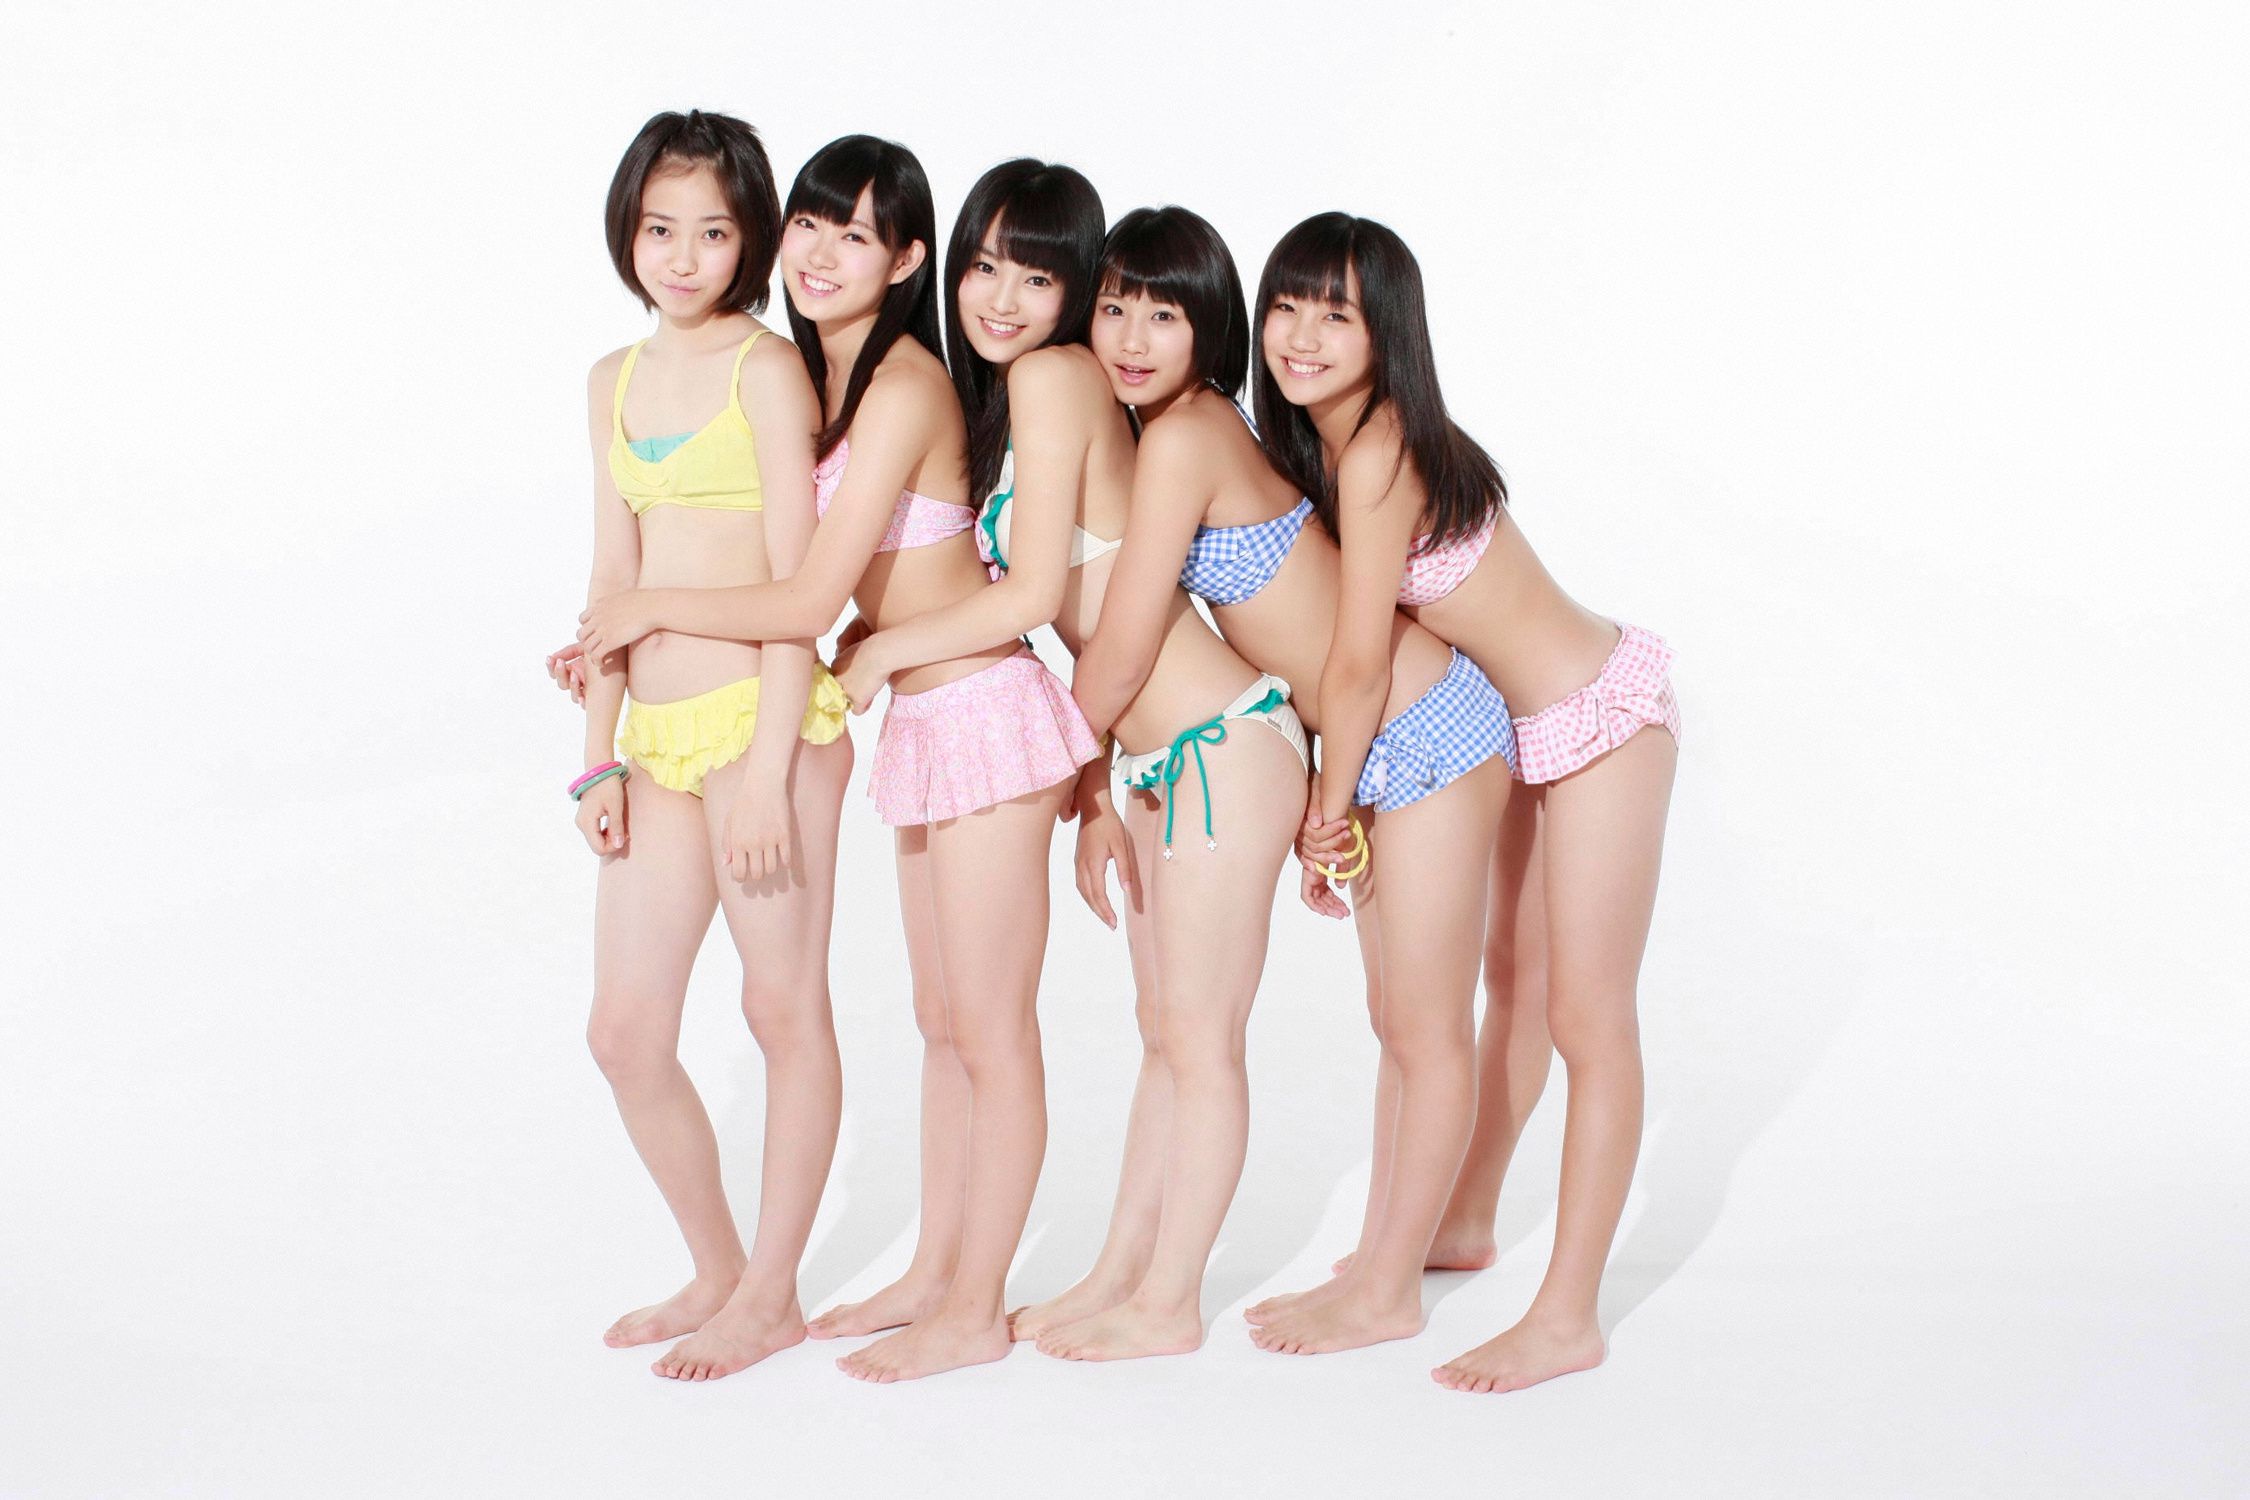 Asian women swim suit models